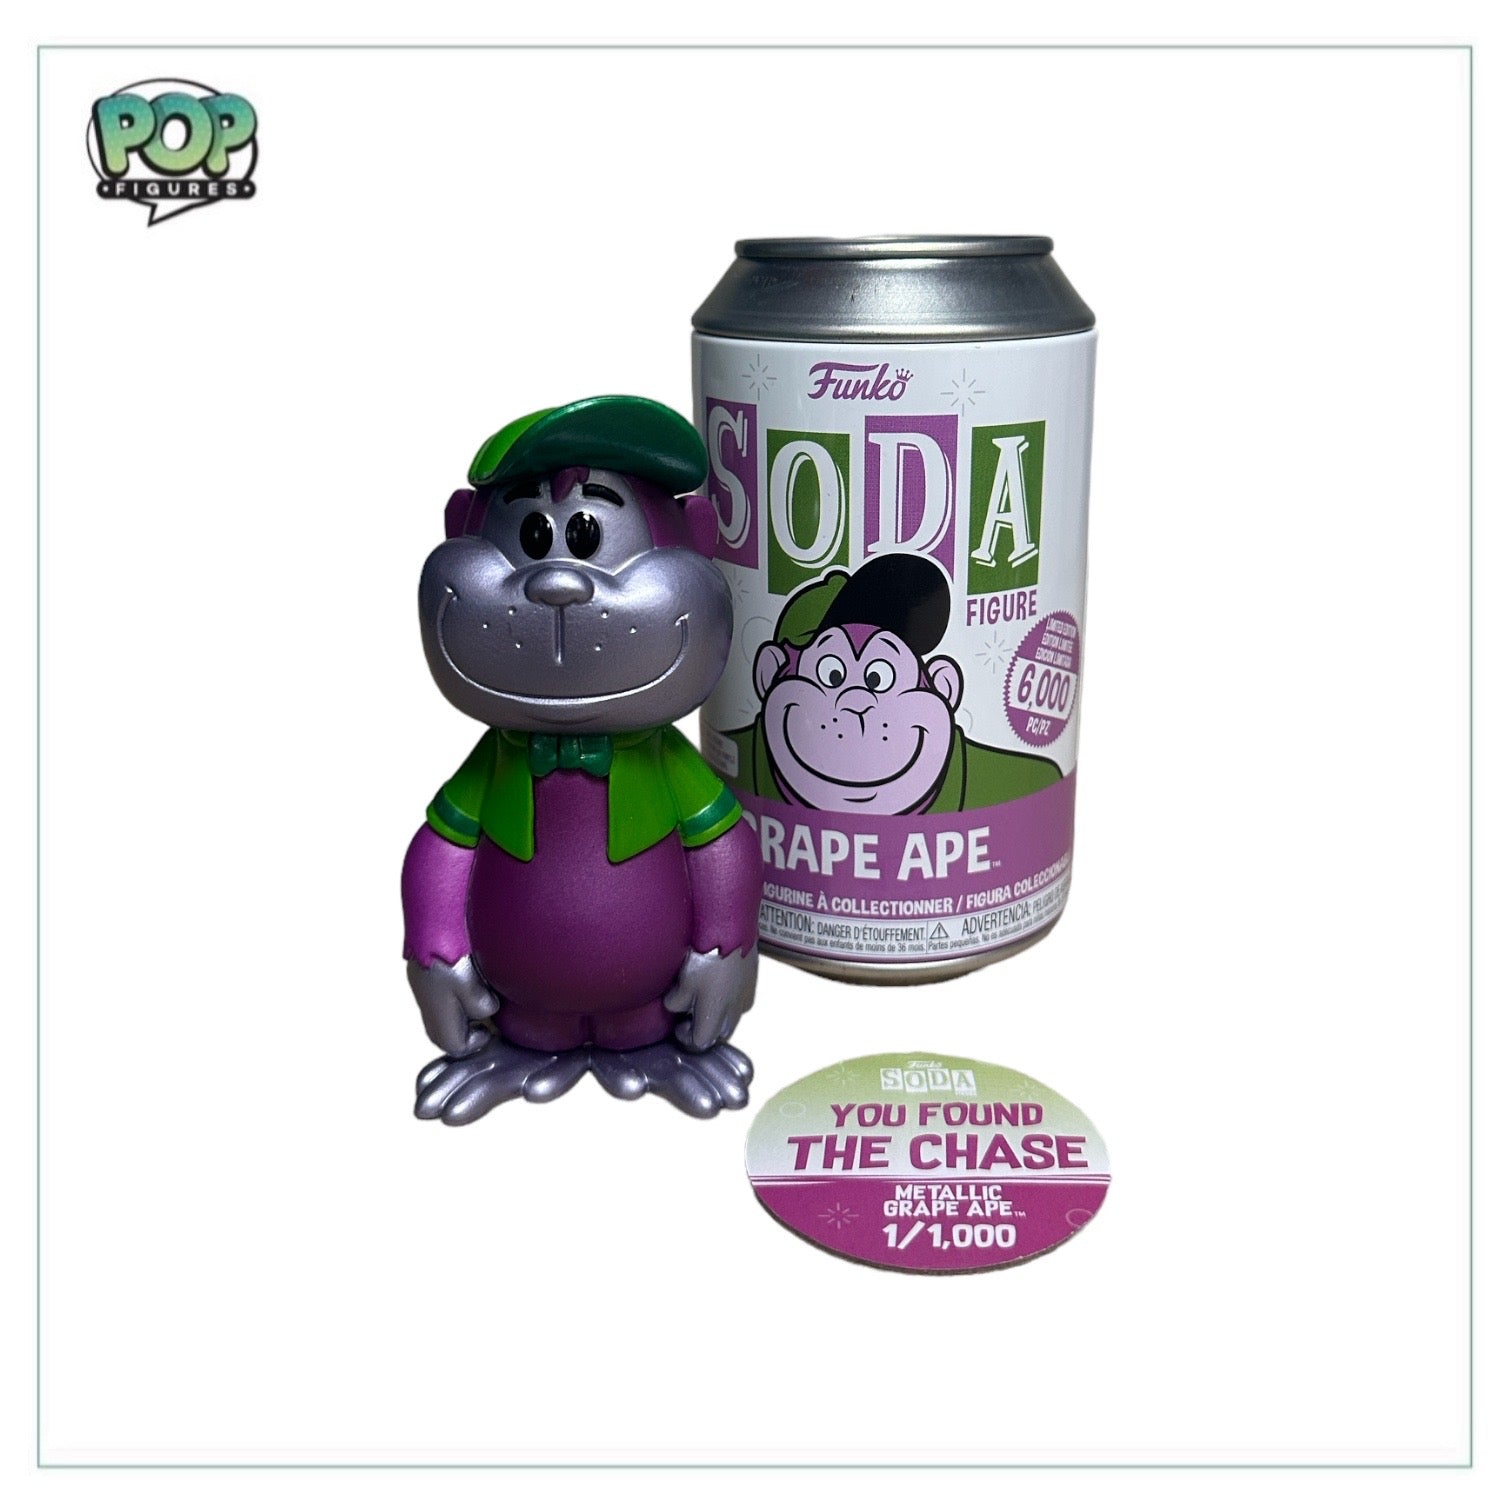 Grape Ape Metallic Chase Funko Soda Vinyl Figure! - The Great Ape Show - LE1/1000 Pcs